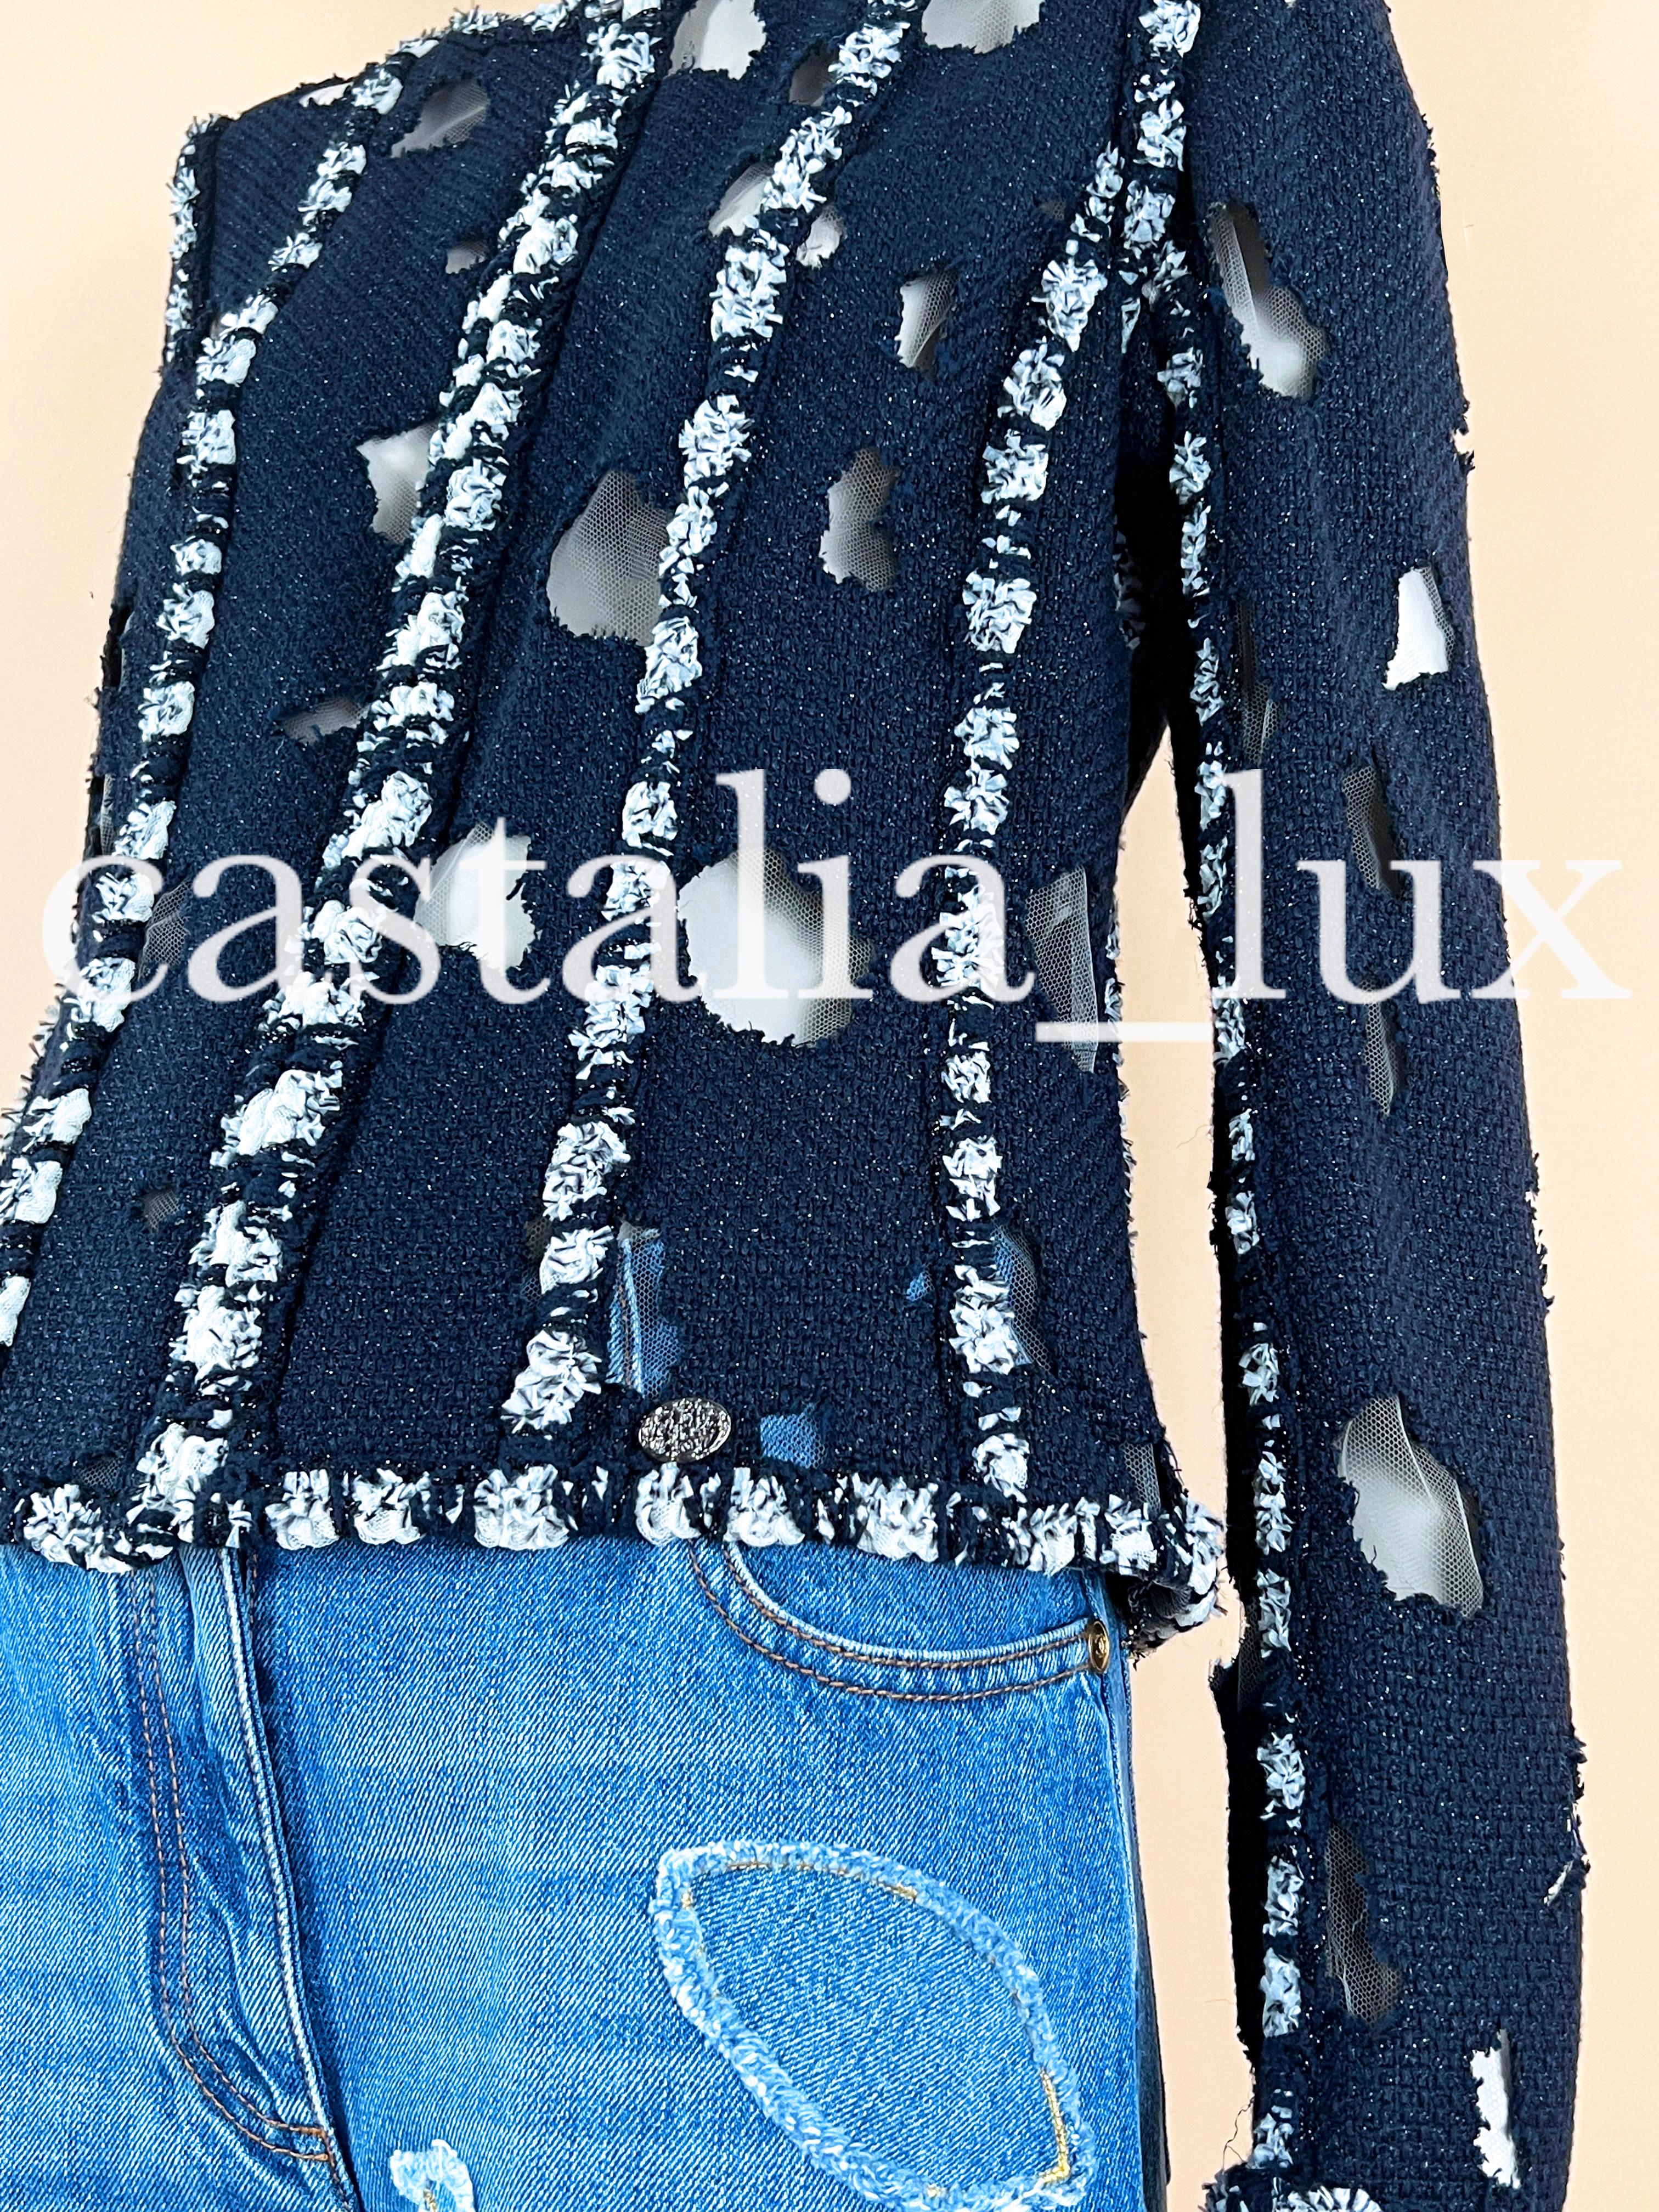 Chanel Iconic Metropolitan Museum Tweed Jacket For Sale 6